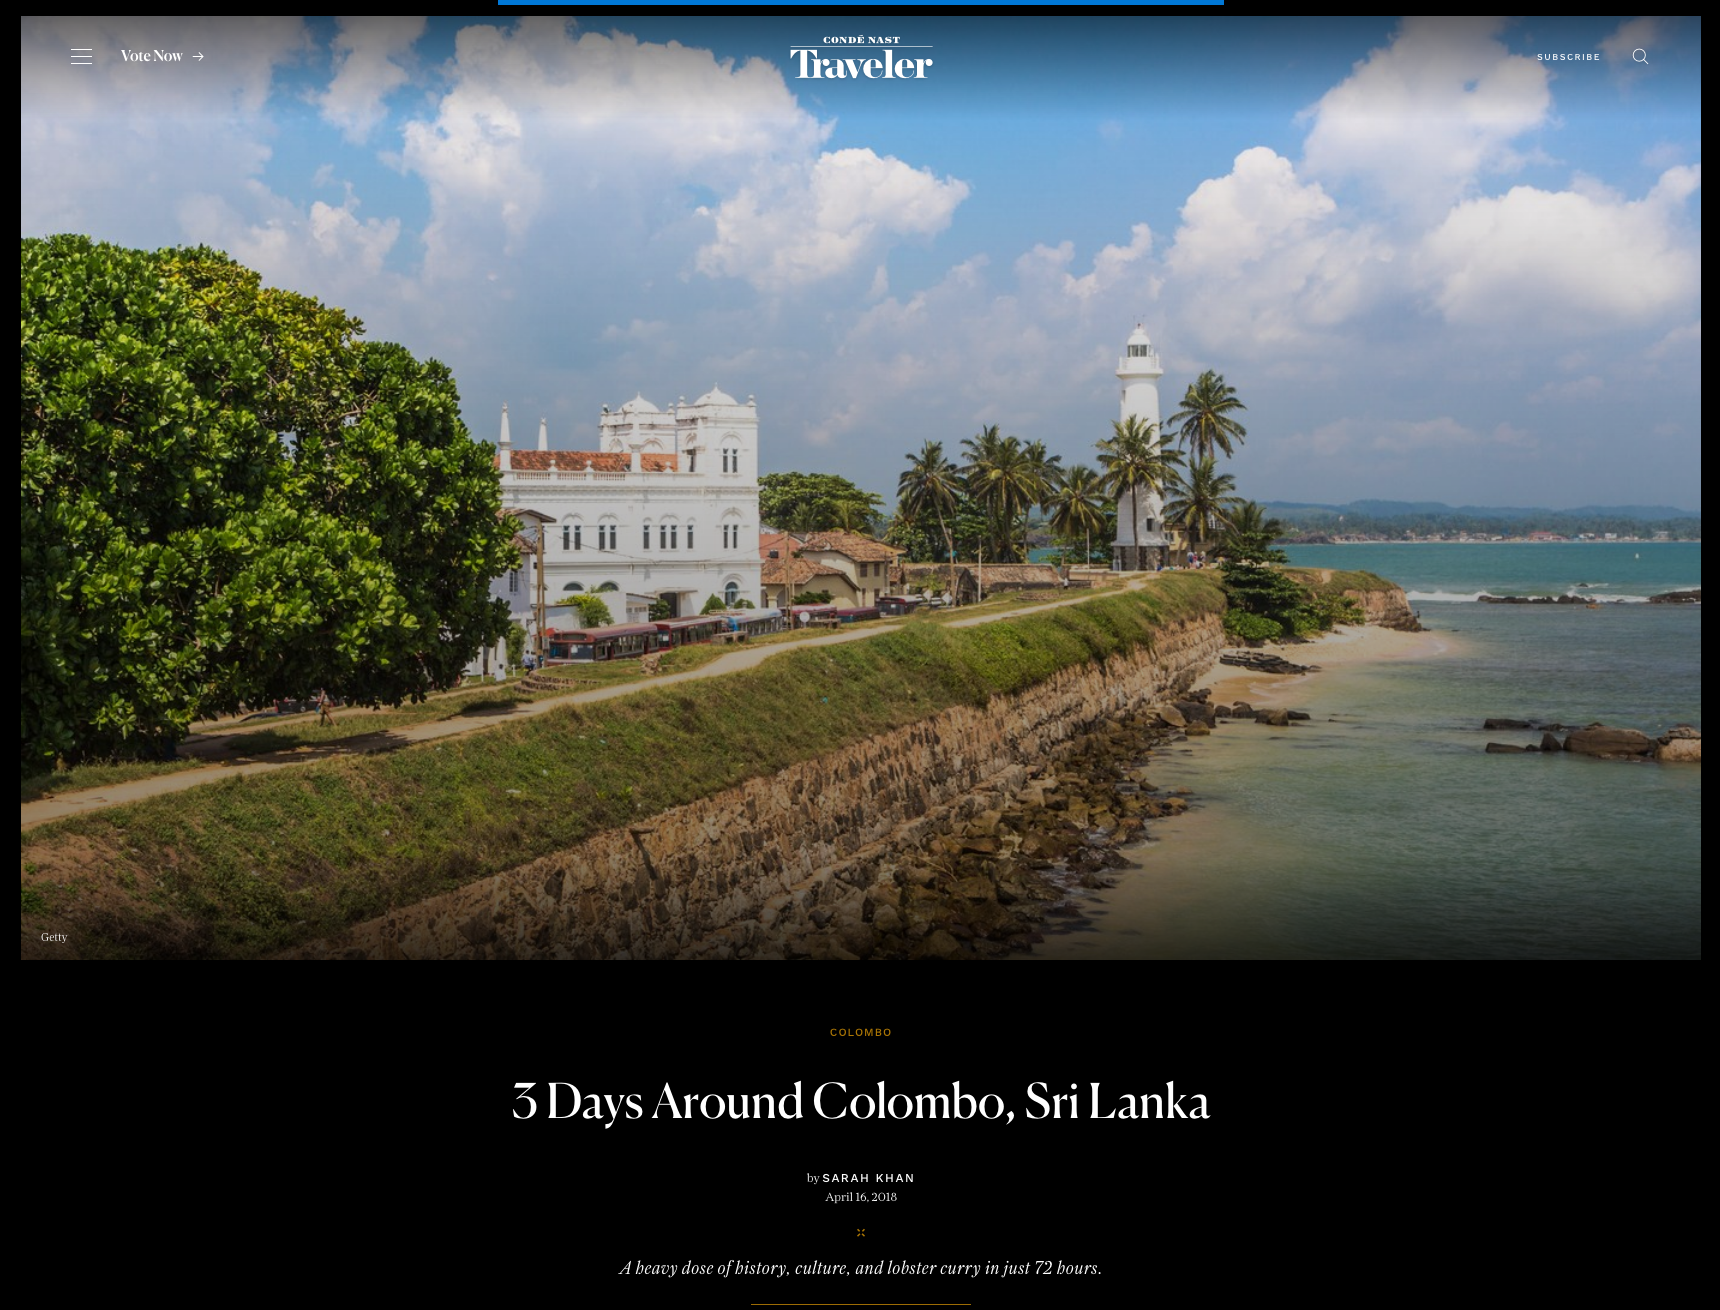 Condé Nast Traveler: Three Days Around Colombo, Sri Lanka